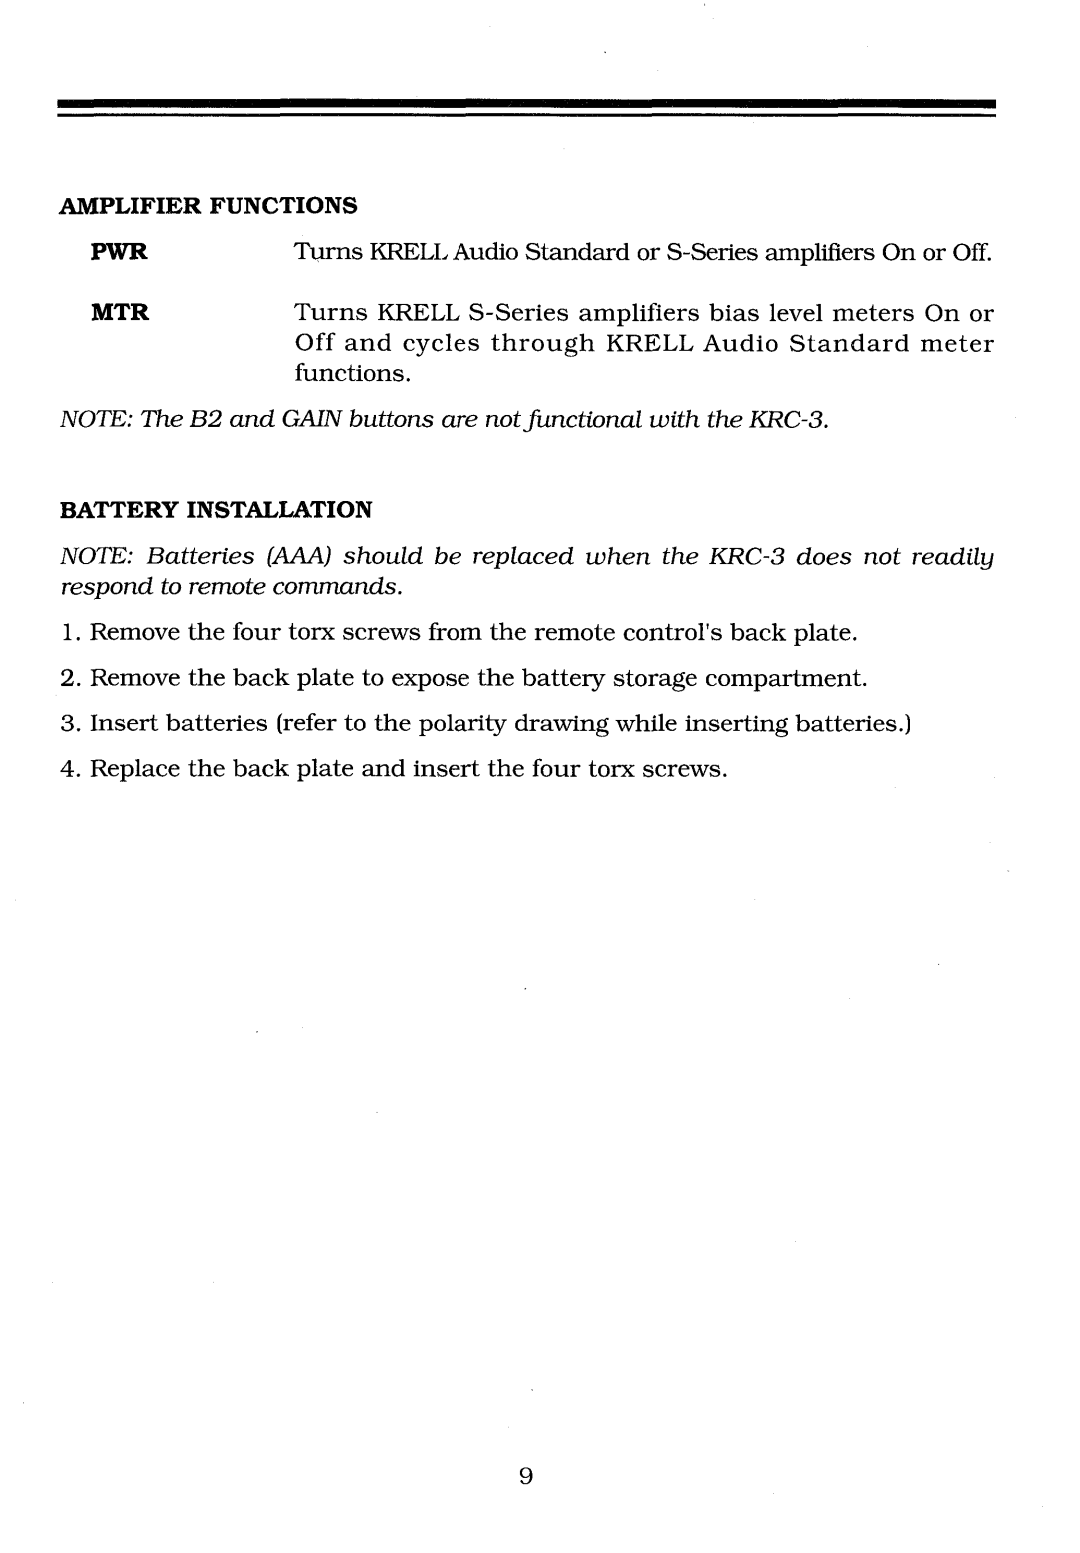 Krell Industries KRC-3 manual Amplifier Functions, Battery Installation 